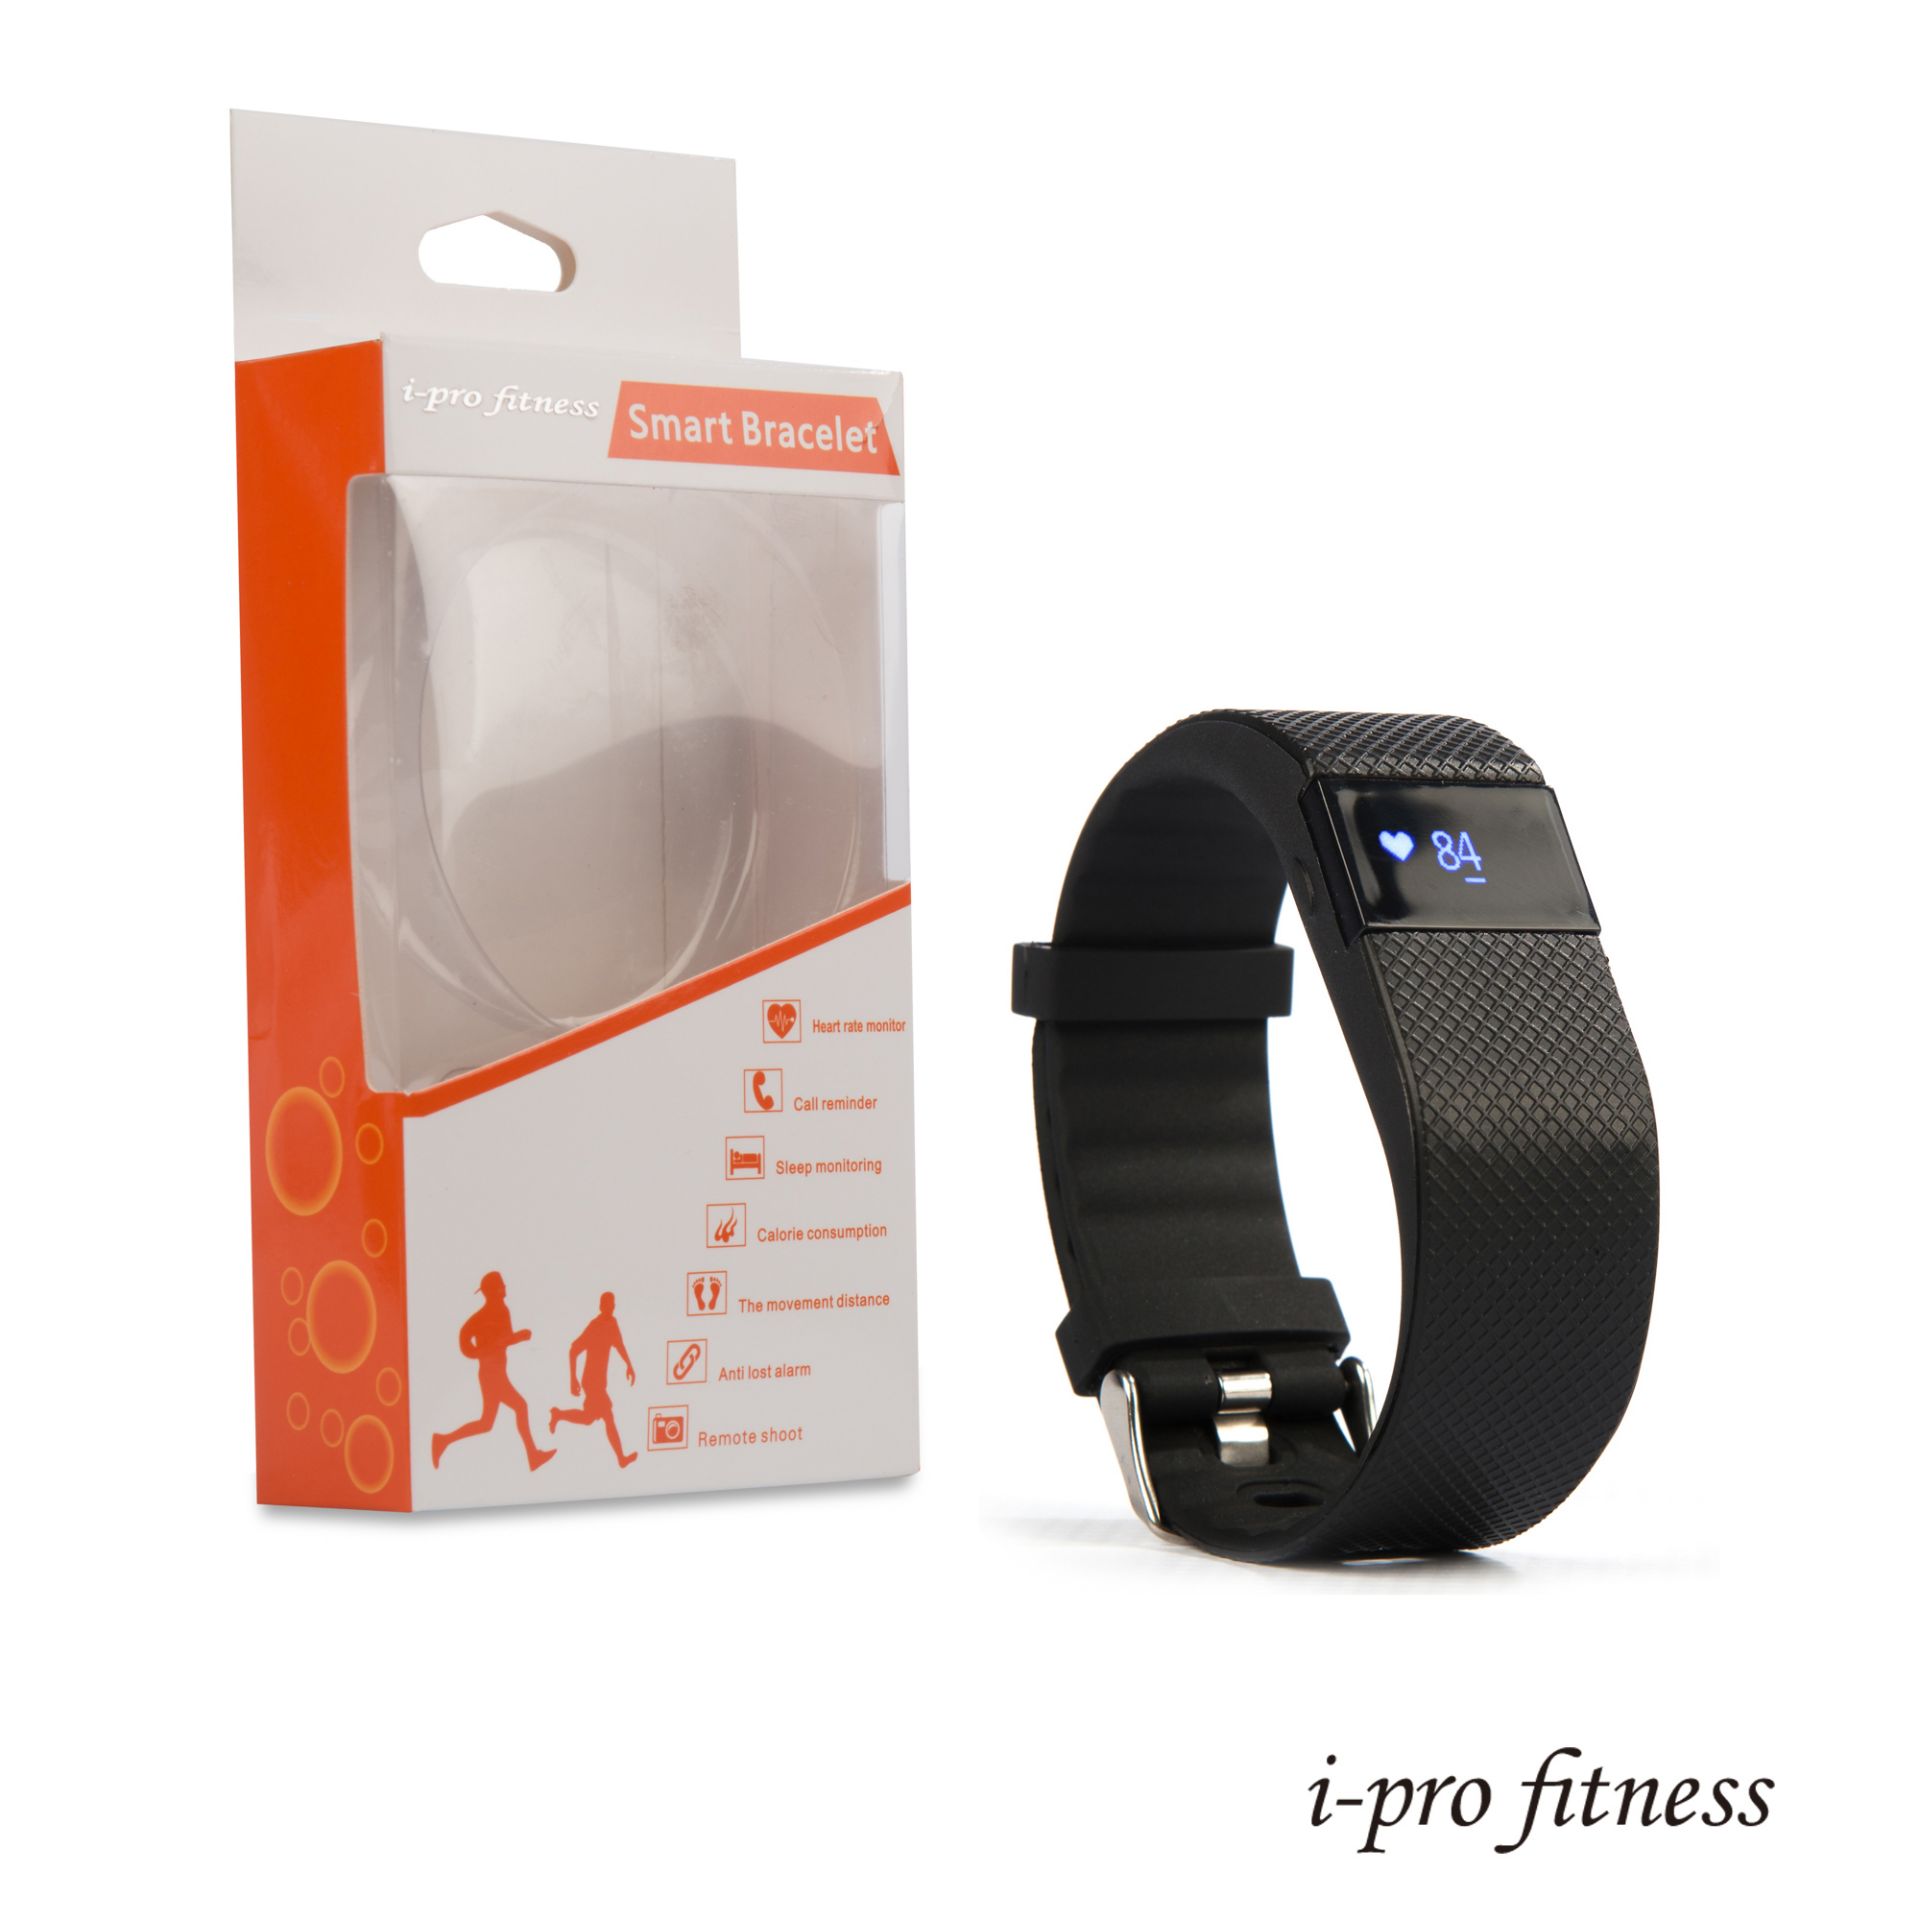 Fitness Tracker i-pro fitness, Bluetooth 4.0 Sports Smart Bracelet, Heart Rate Monitor & Pedometer. - Image 8 of 8